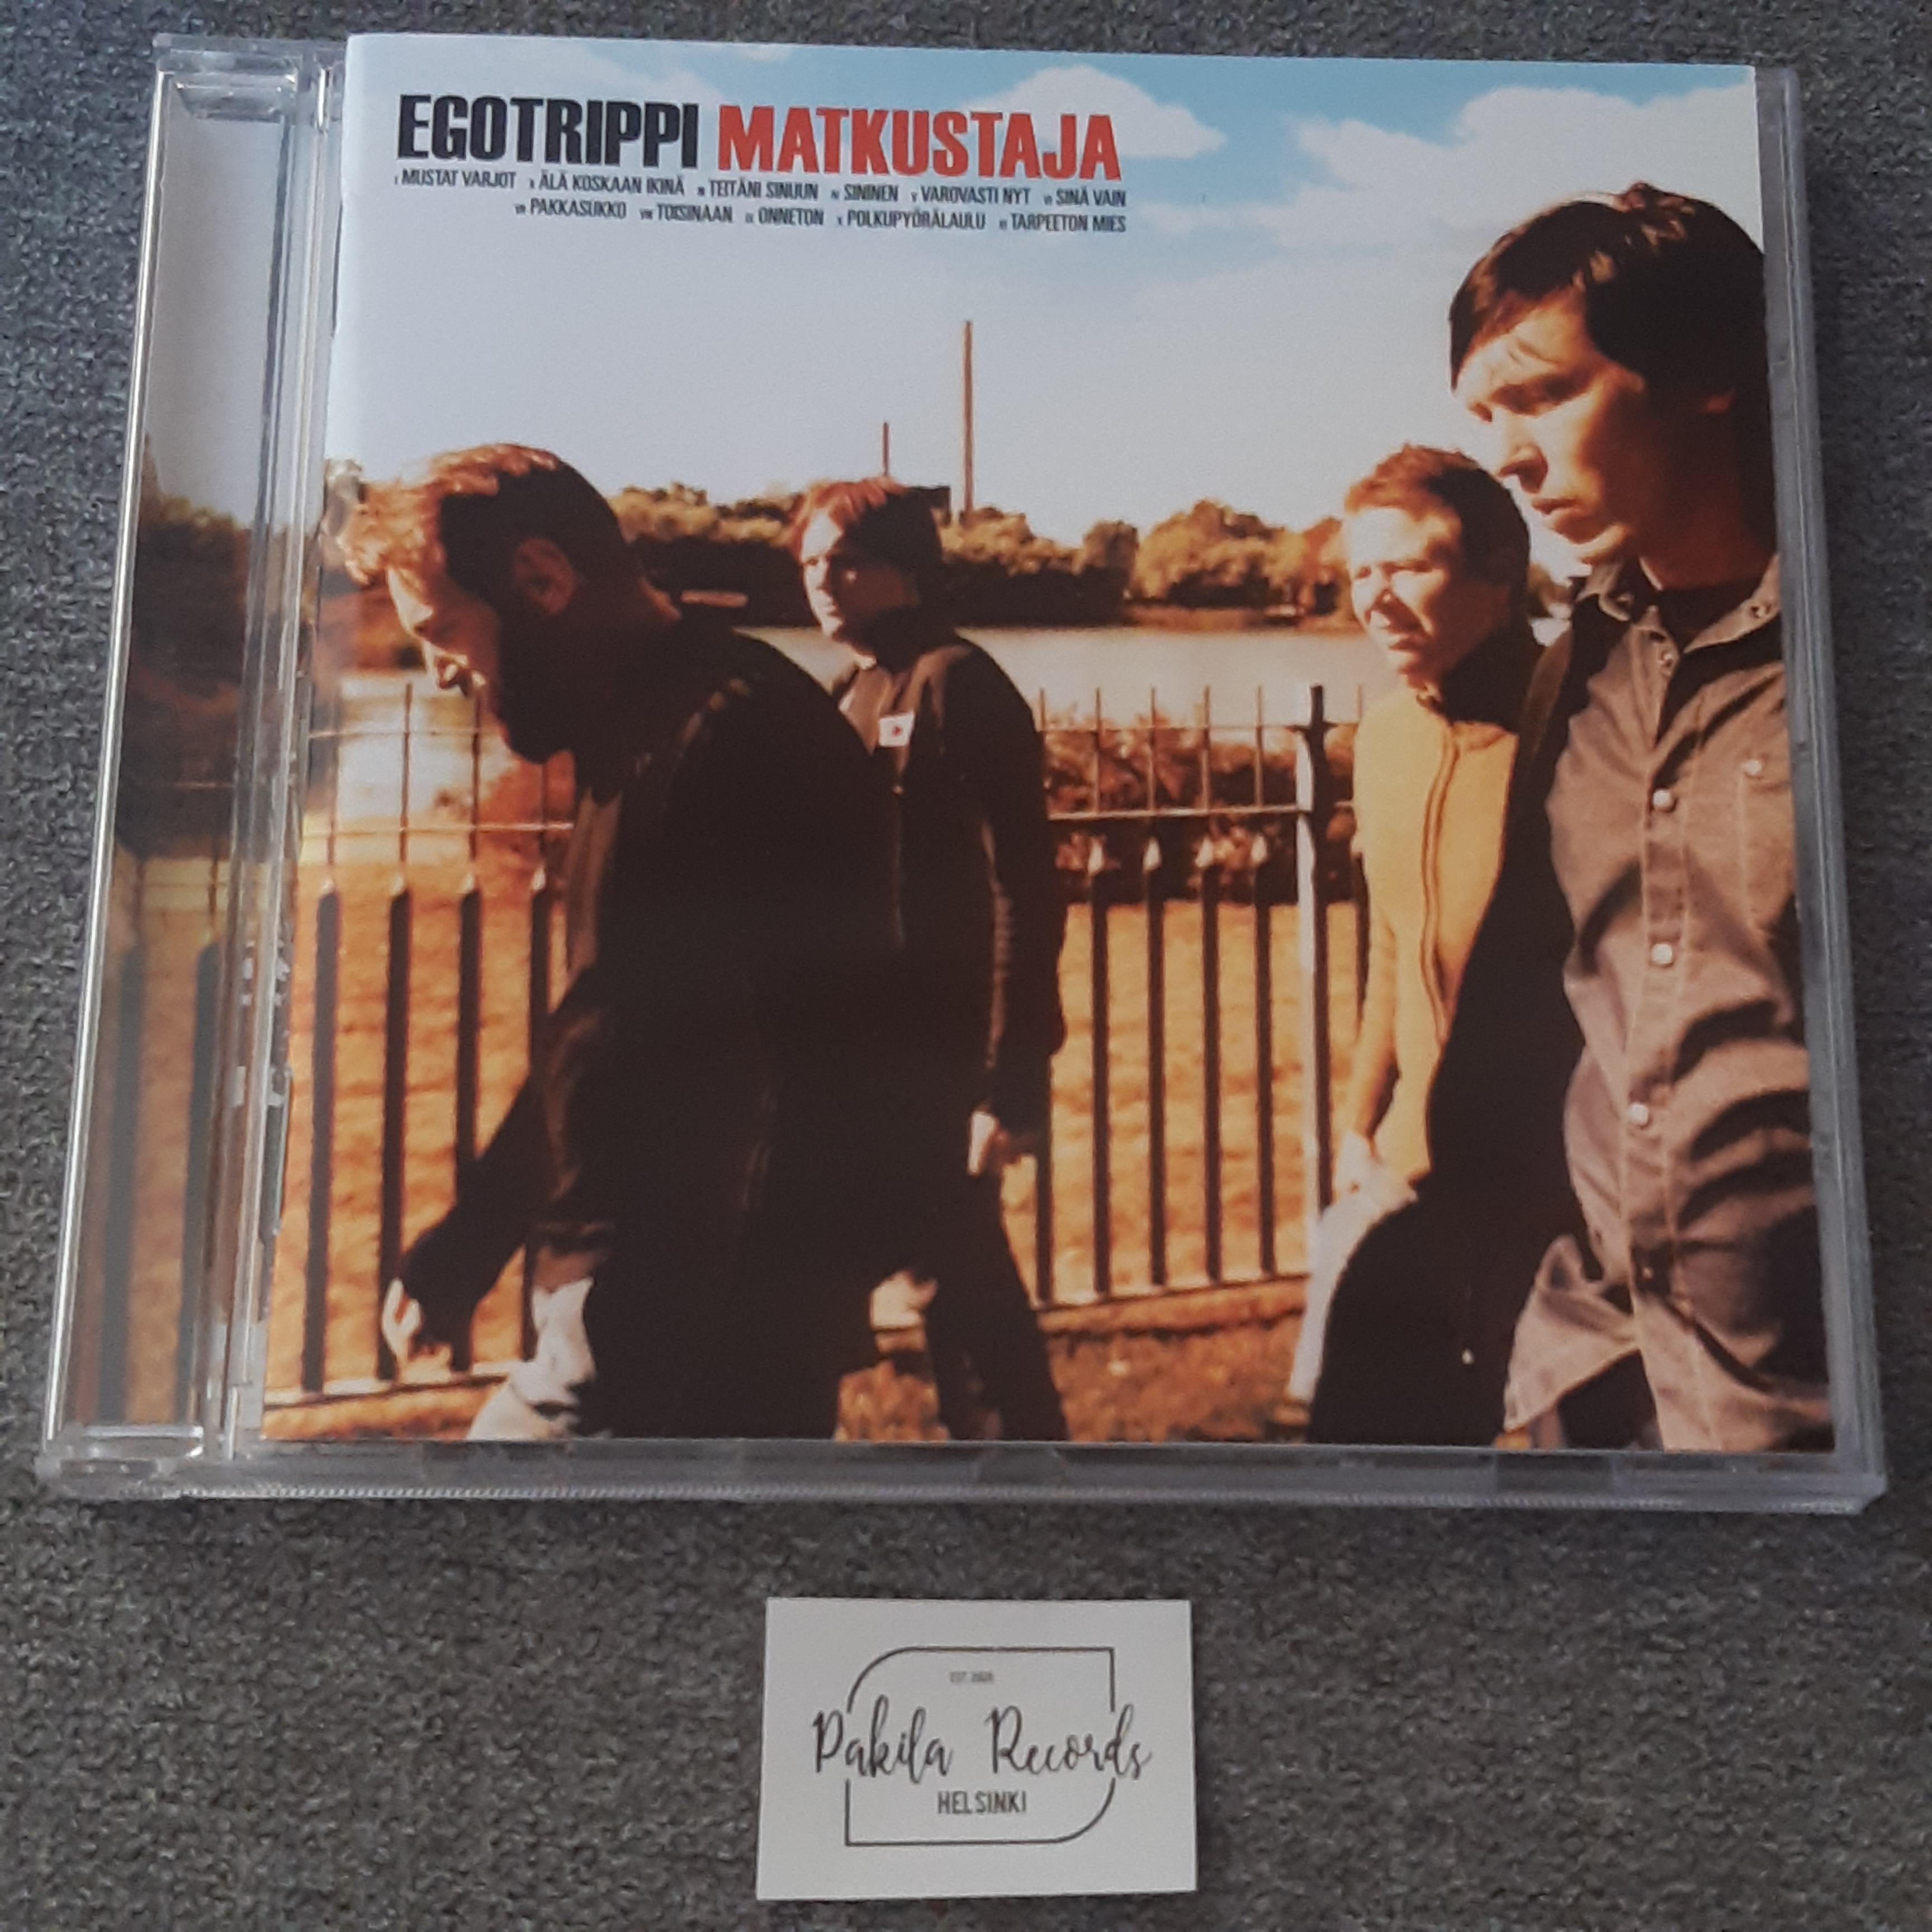 Egotrippi - Matkustaja - CD (käytetty)